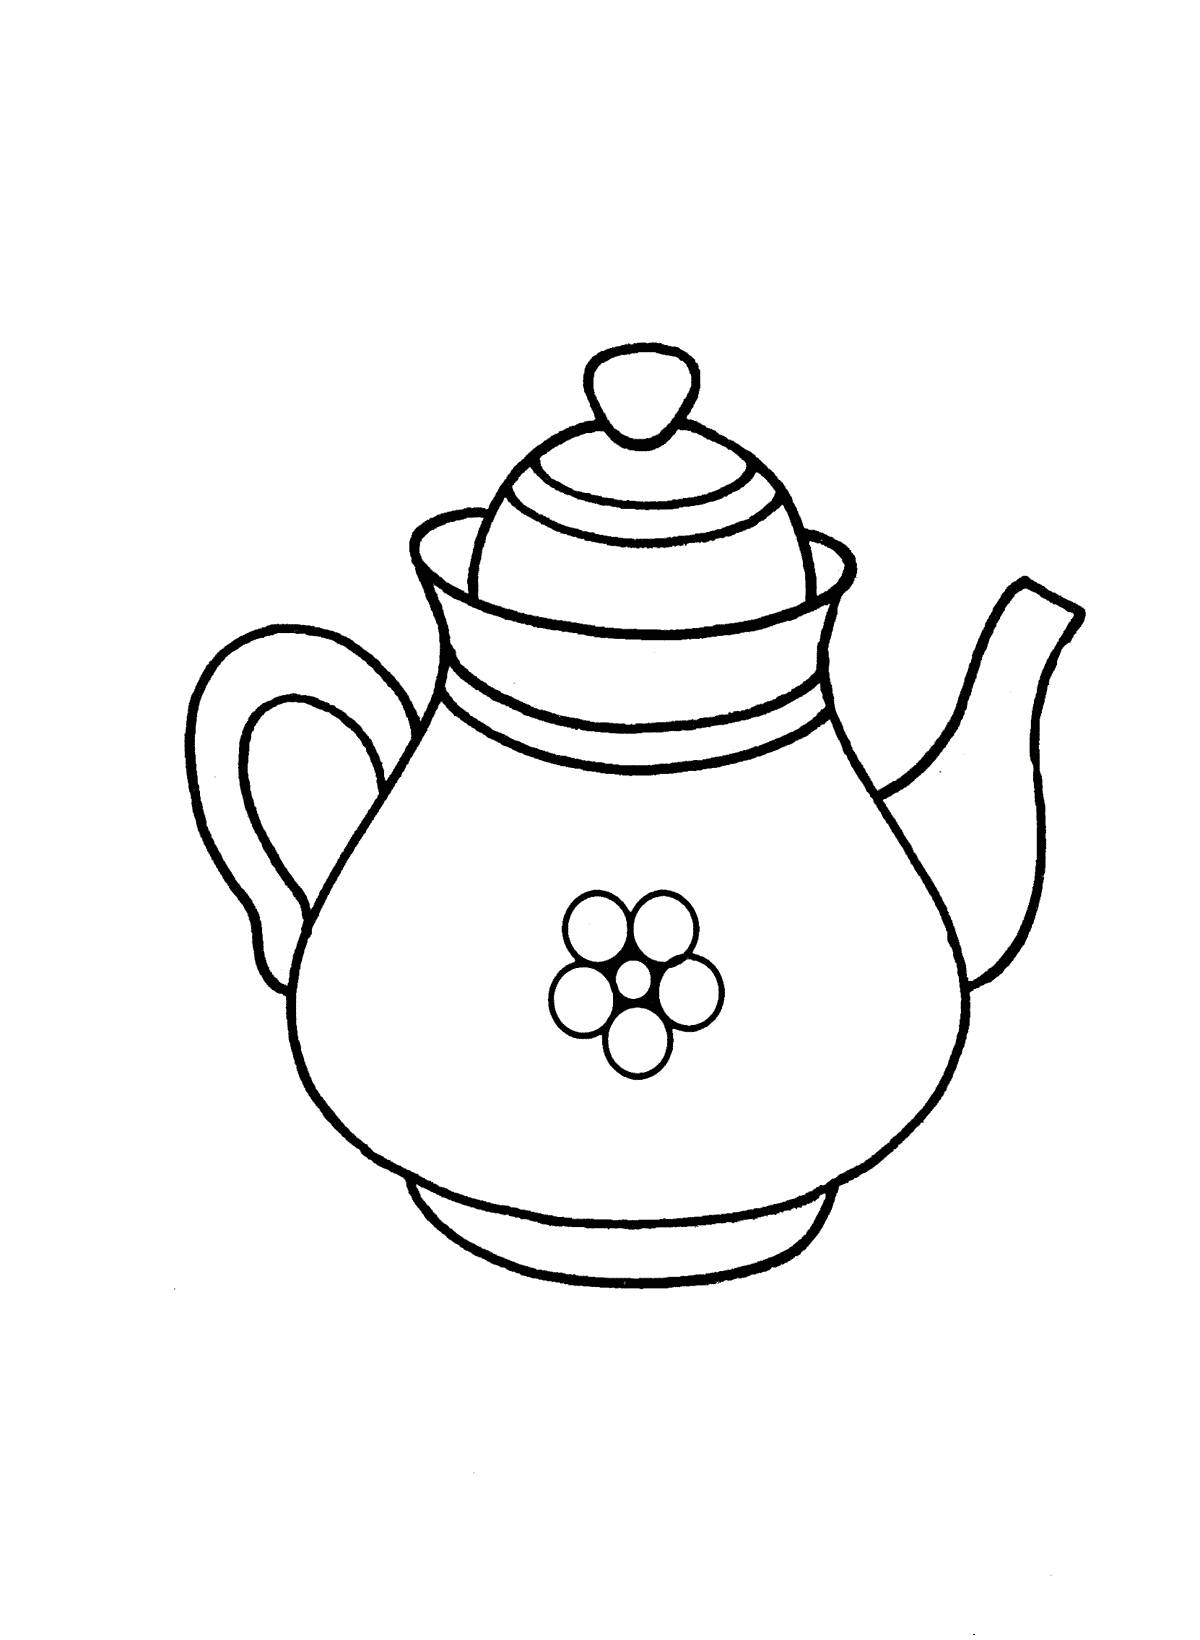 Flower teapot